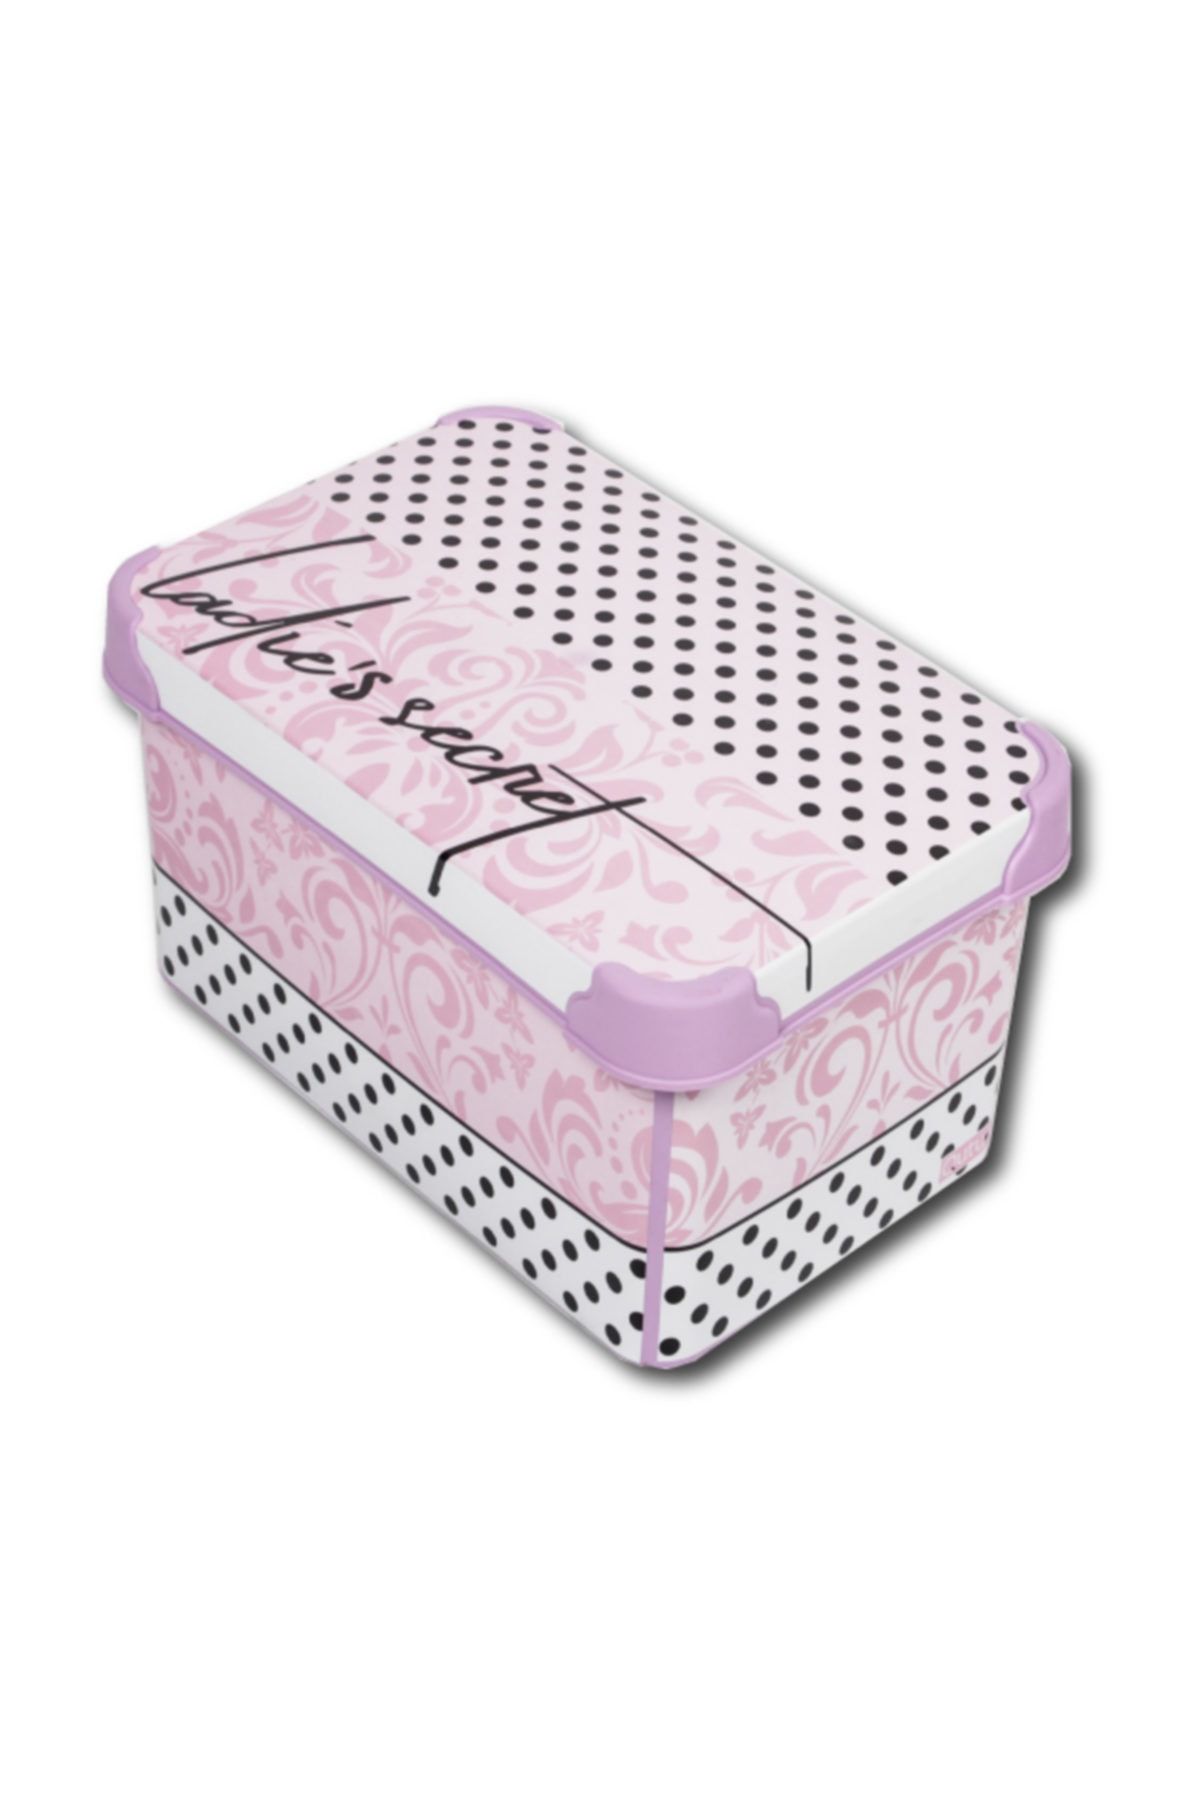 QUTU Style Box 5 L Ladys Secret Desenli Dekoratif Saklama Kutusu